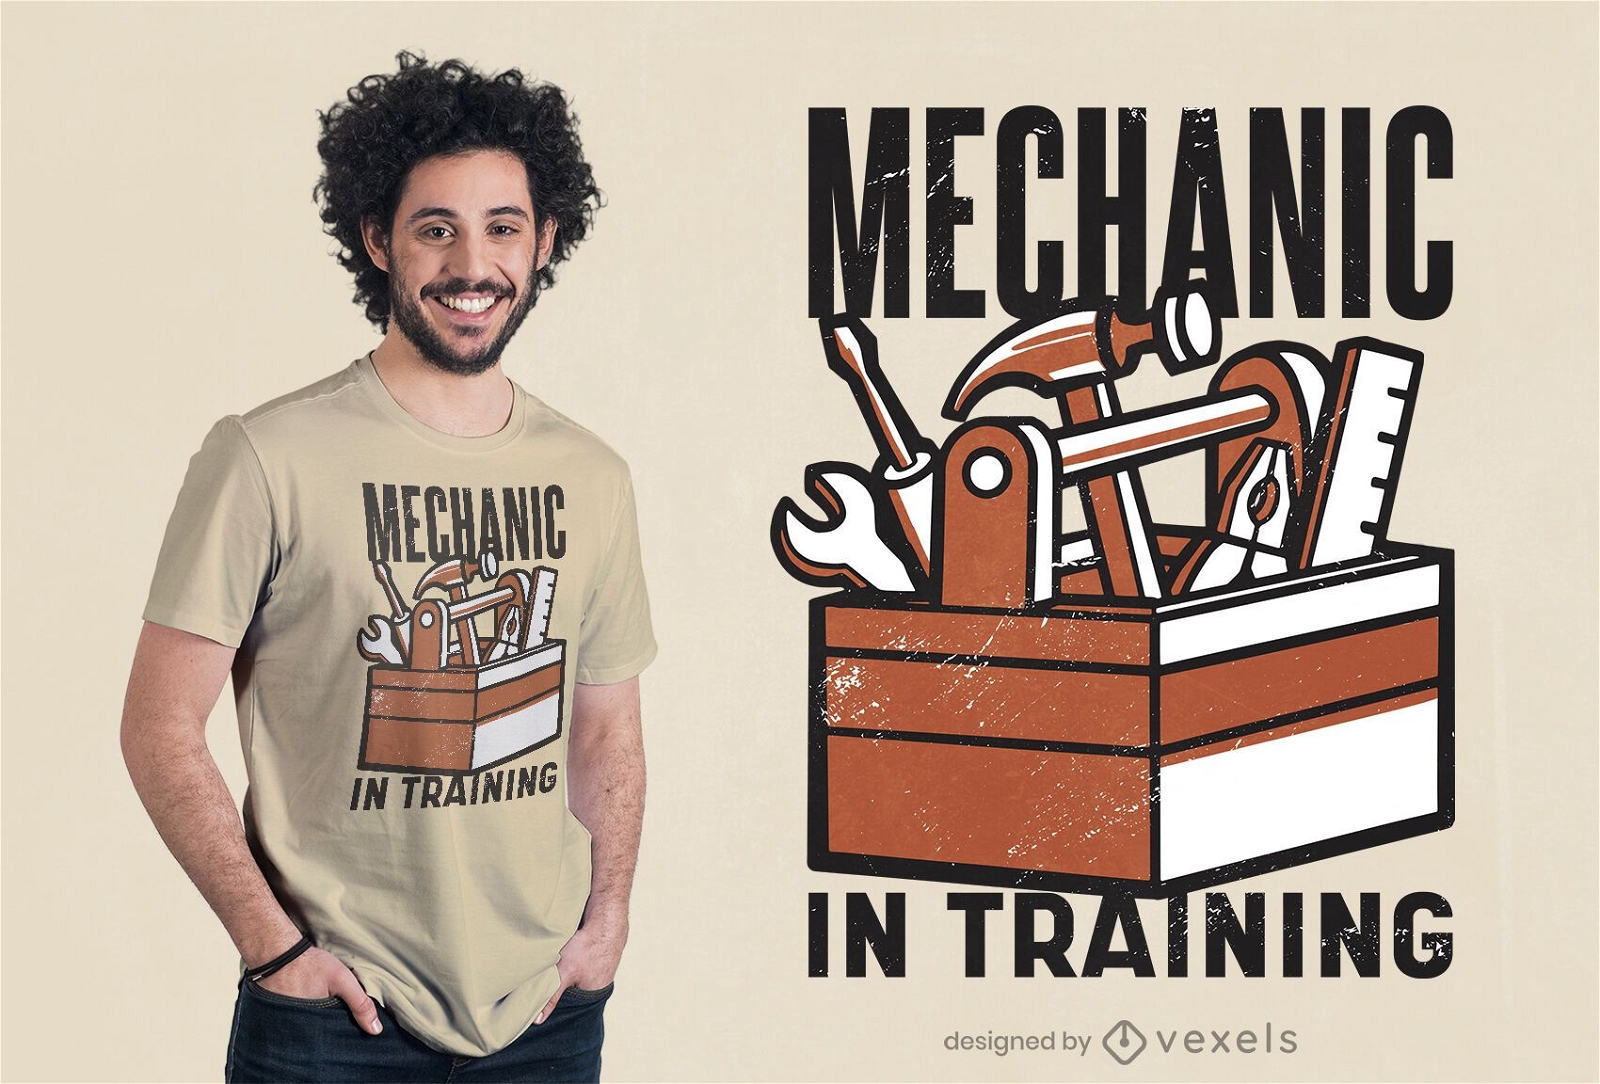 Mechanic in training t-shirt design